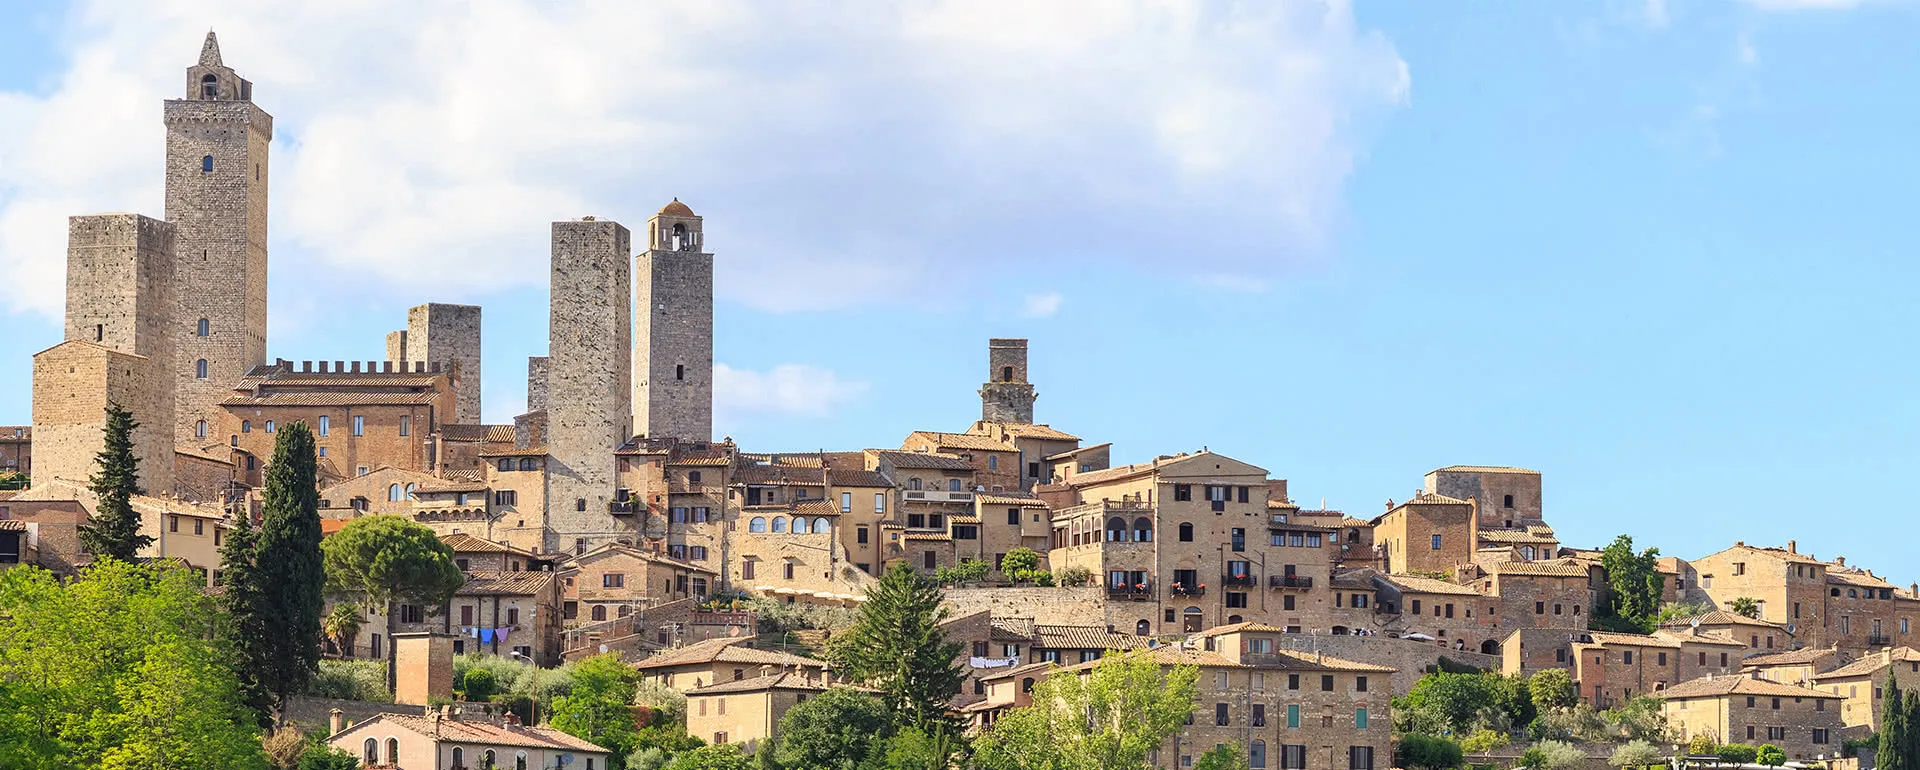 San Gimignano - the destination for company trips